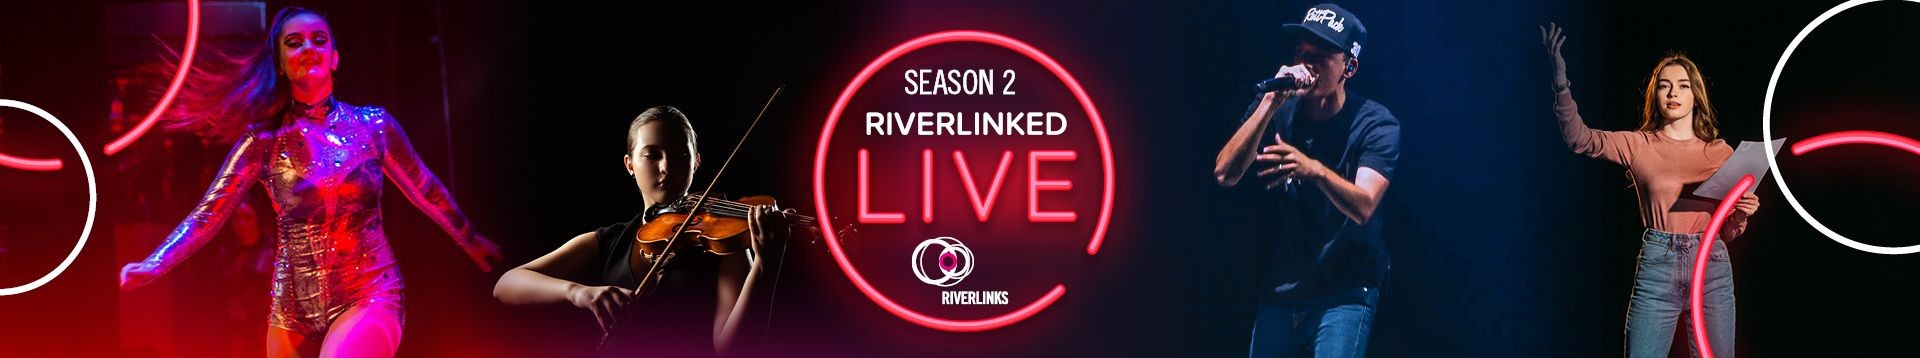 RiverLinked LIVE - Series 2